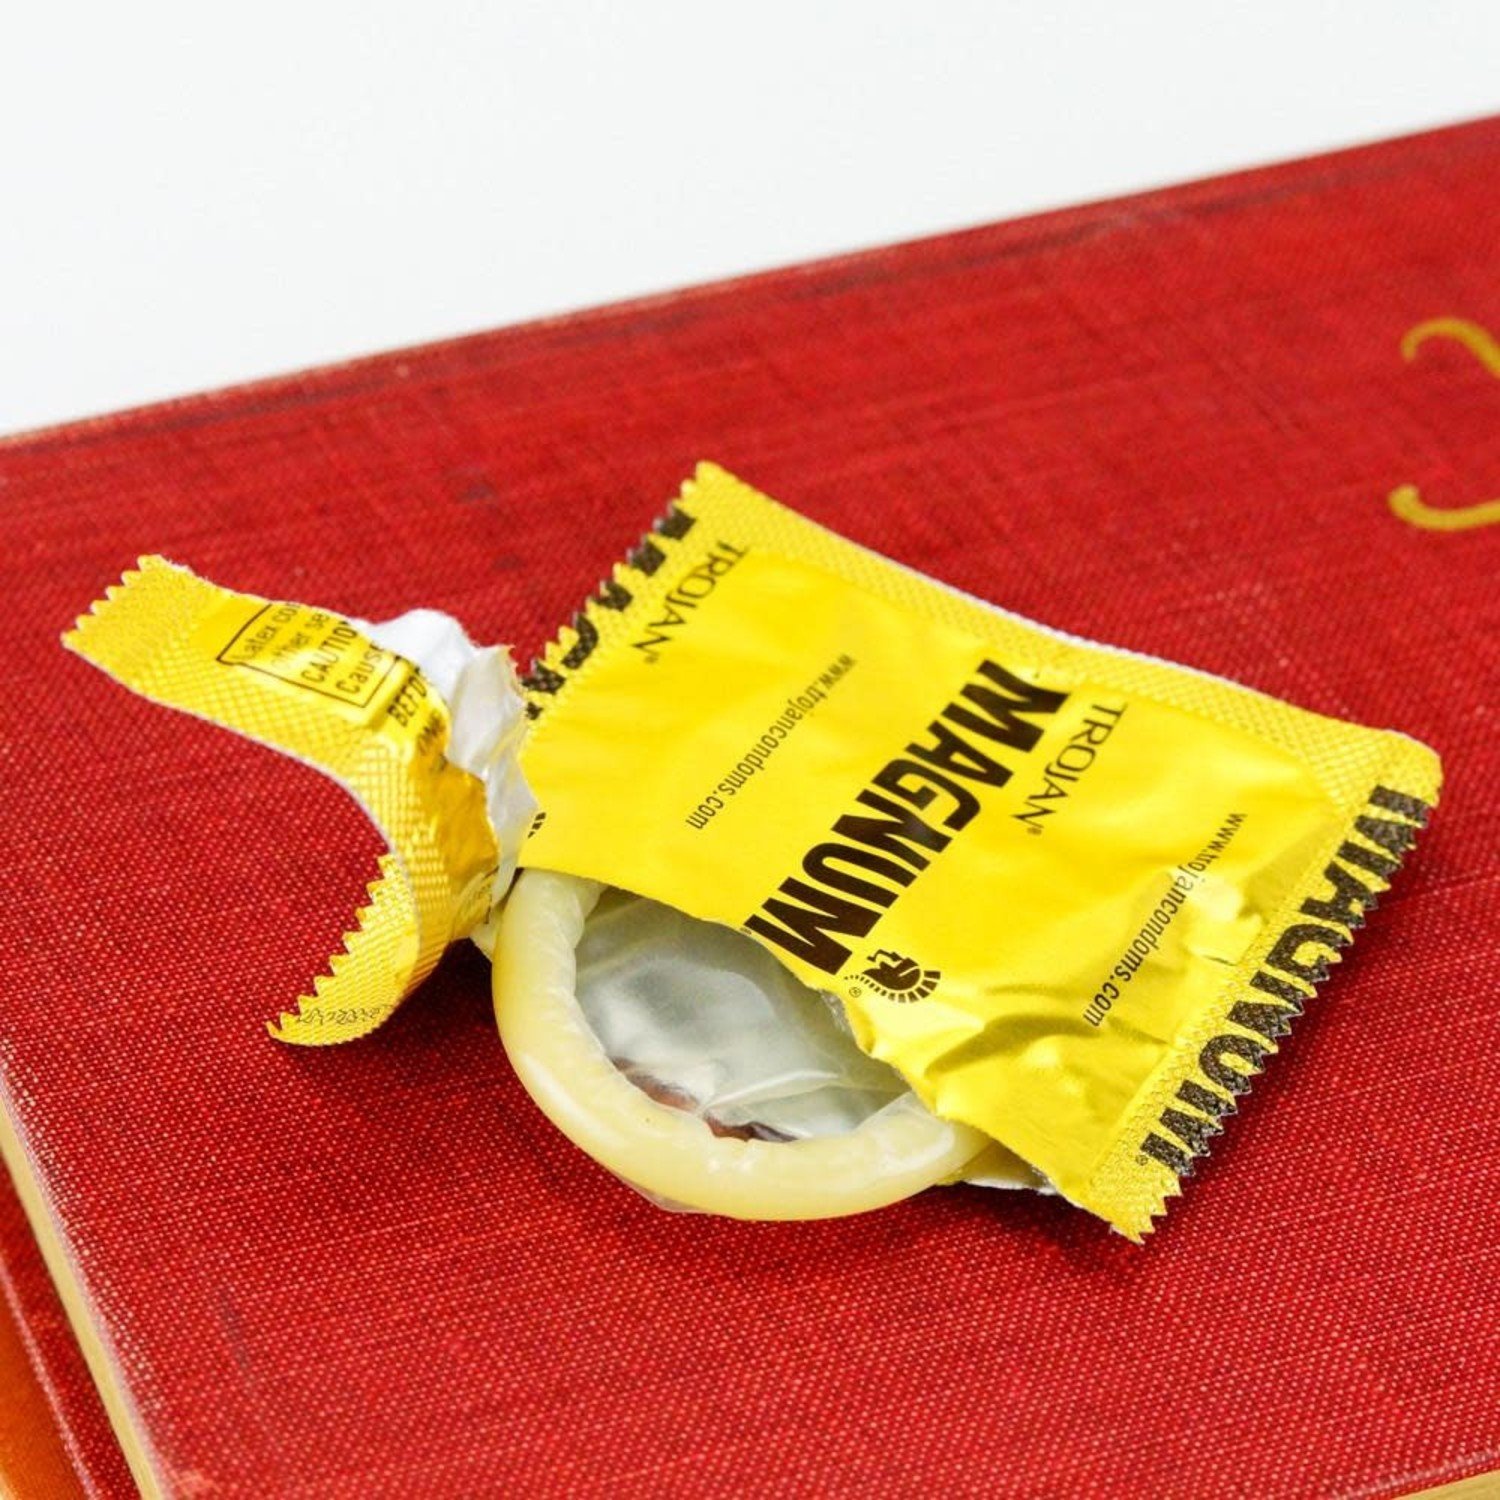 open trojan condom wrapper